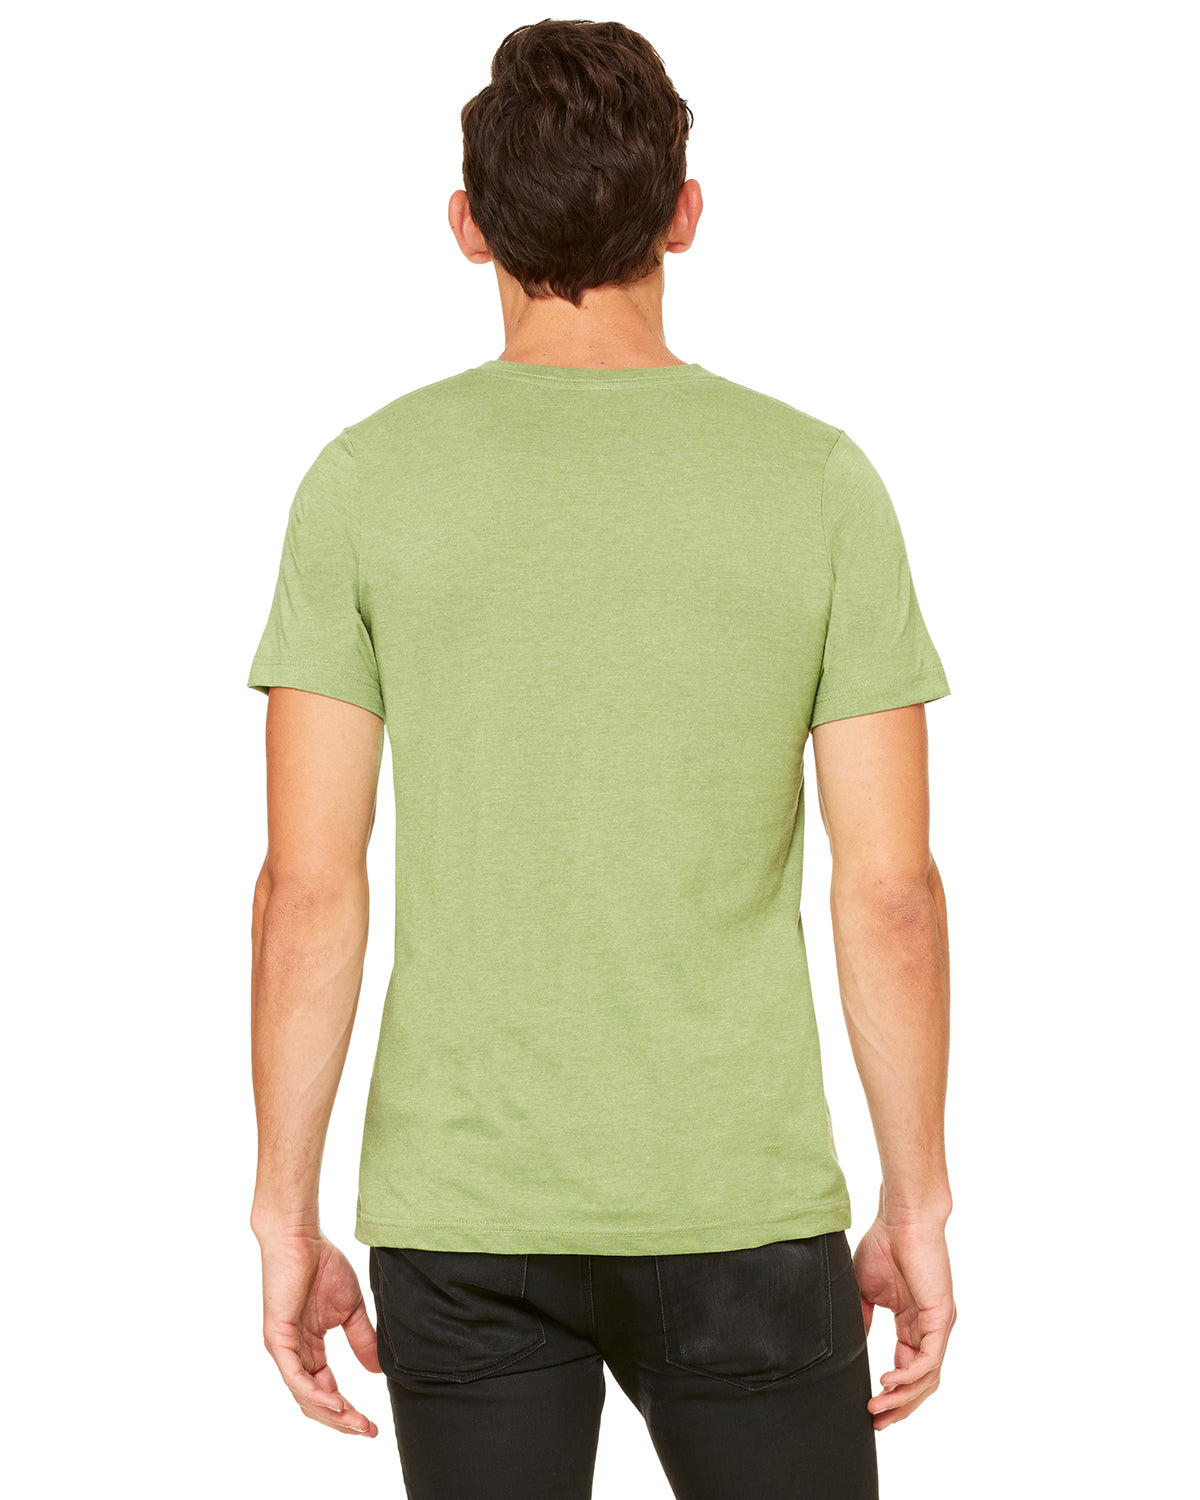 3005 – Bella + Canvas Unisex Jersey Short-Sleeve V-Neck T-Shirt